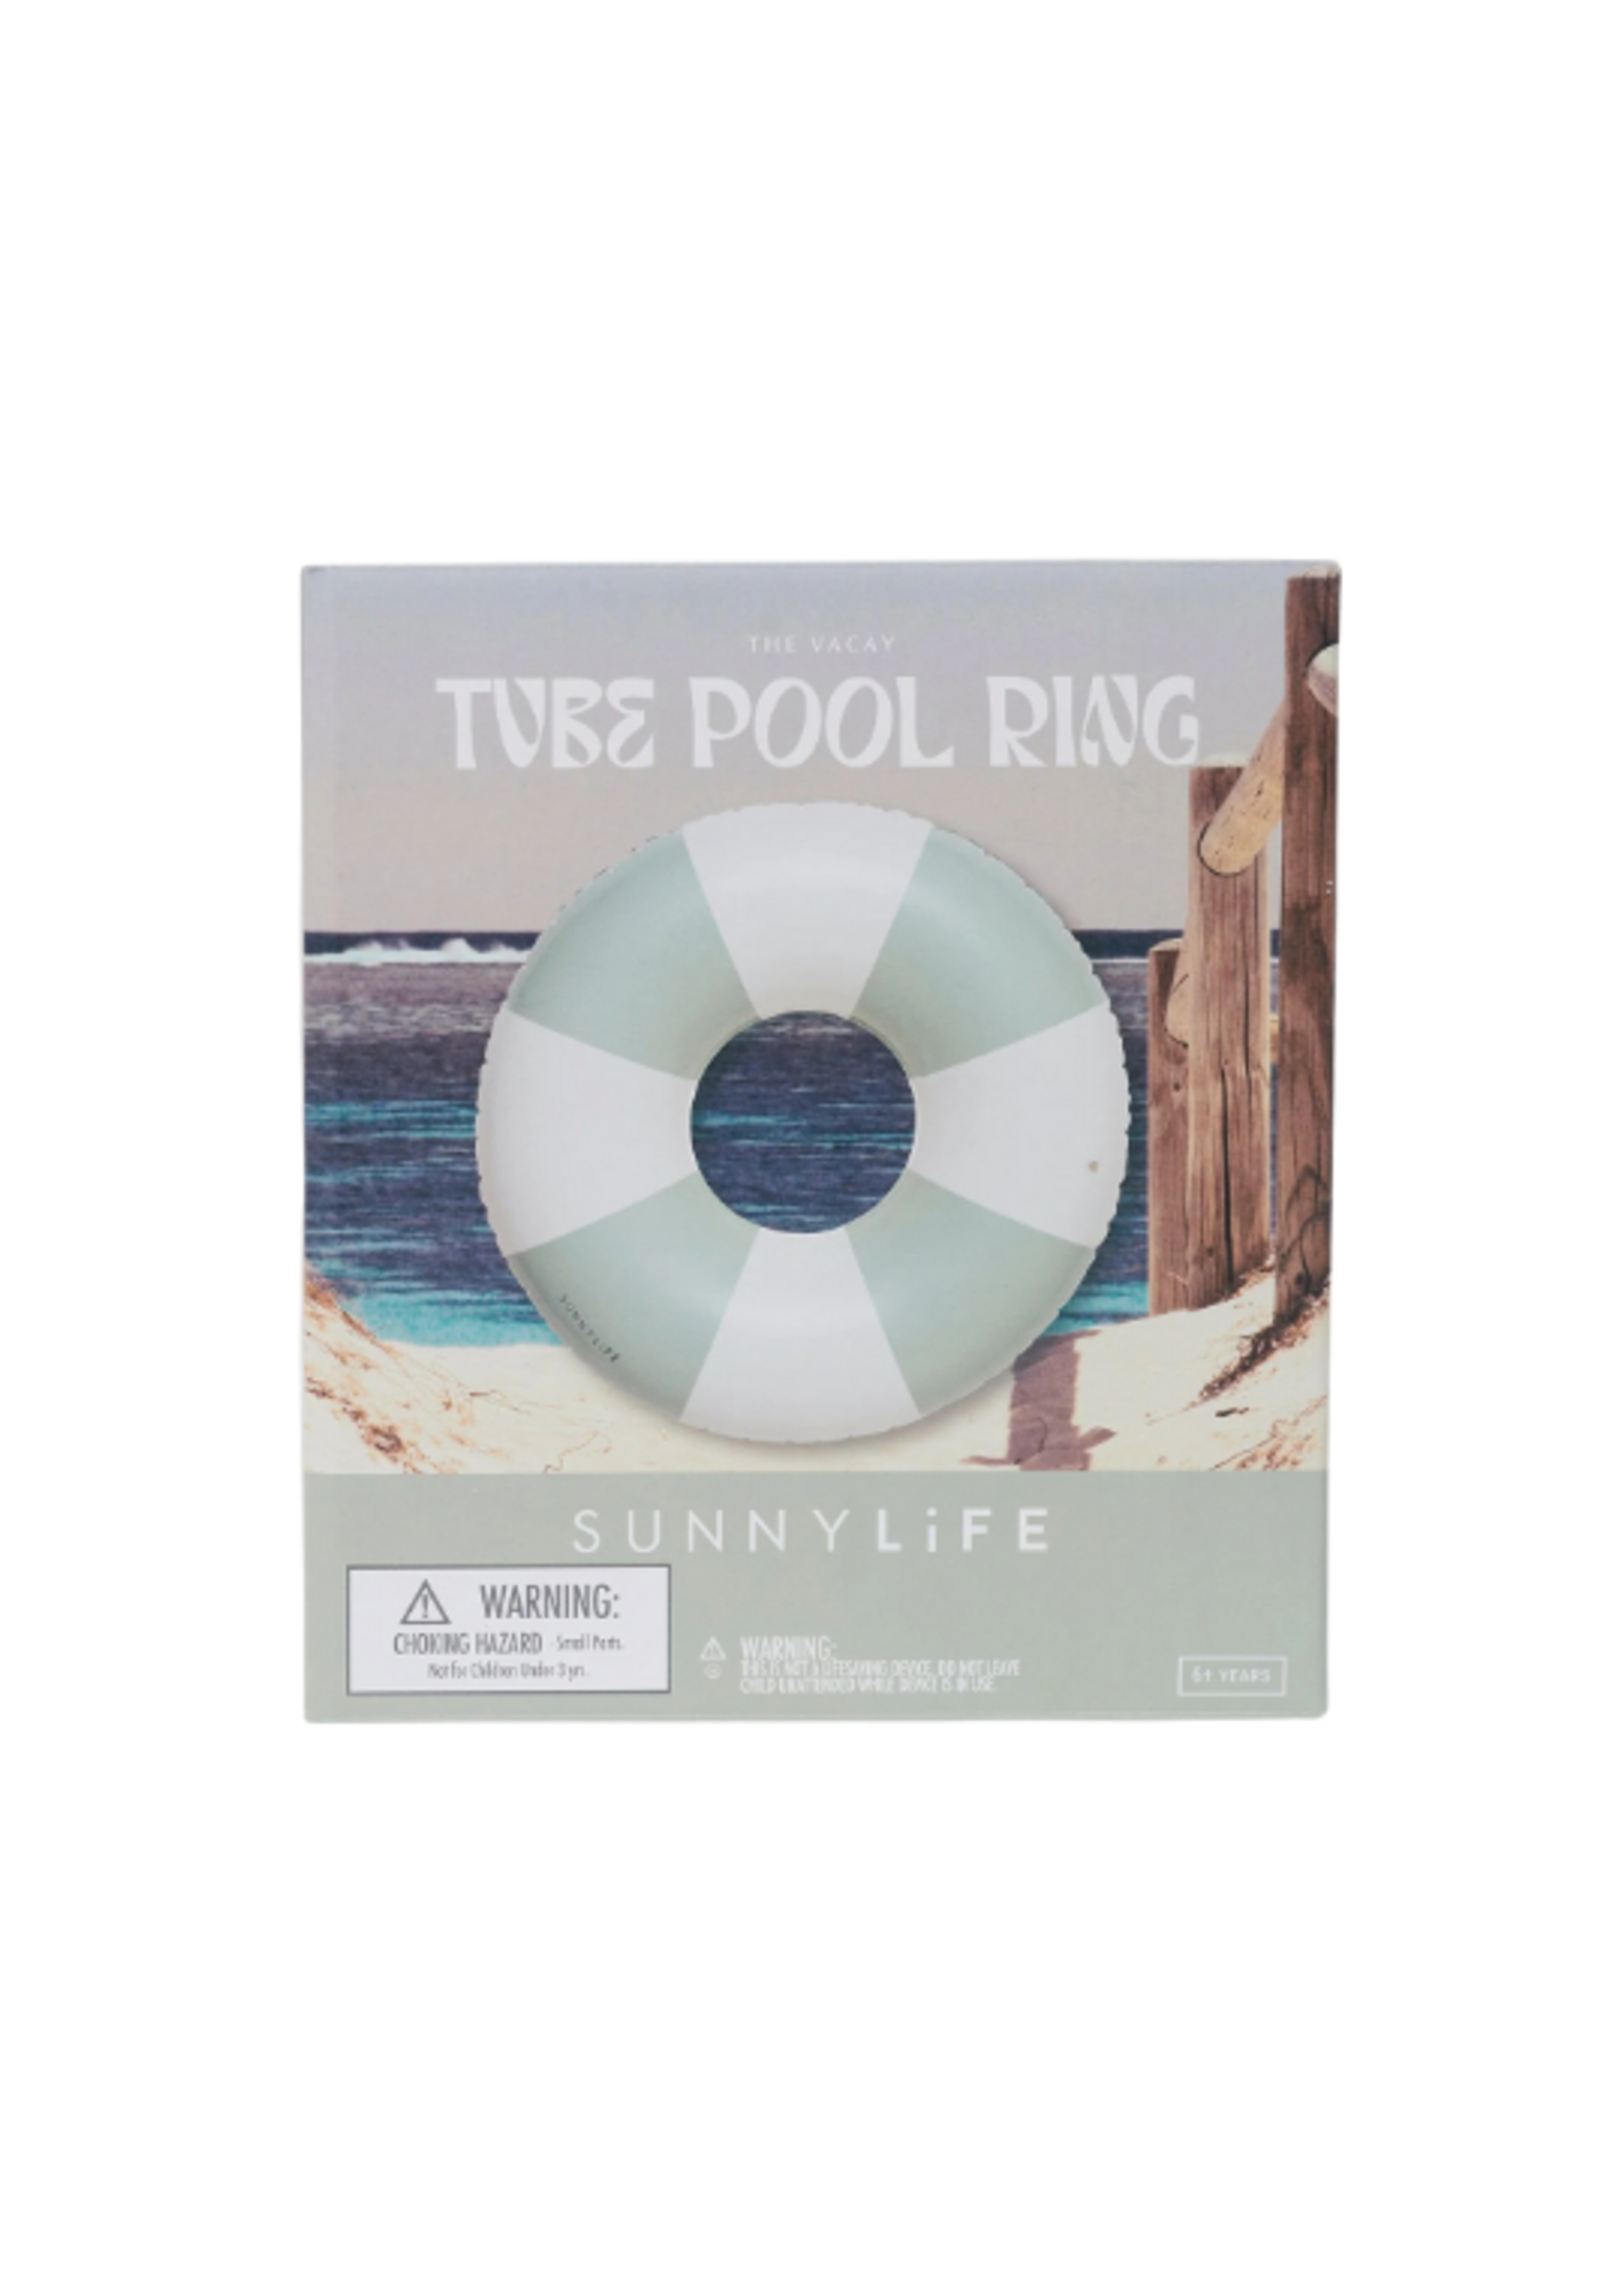 Sunny Life Tube Pool Ring